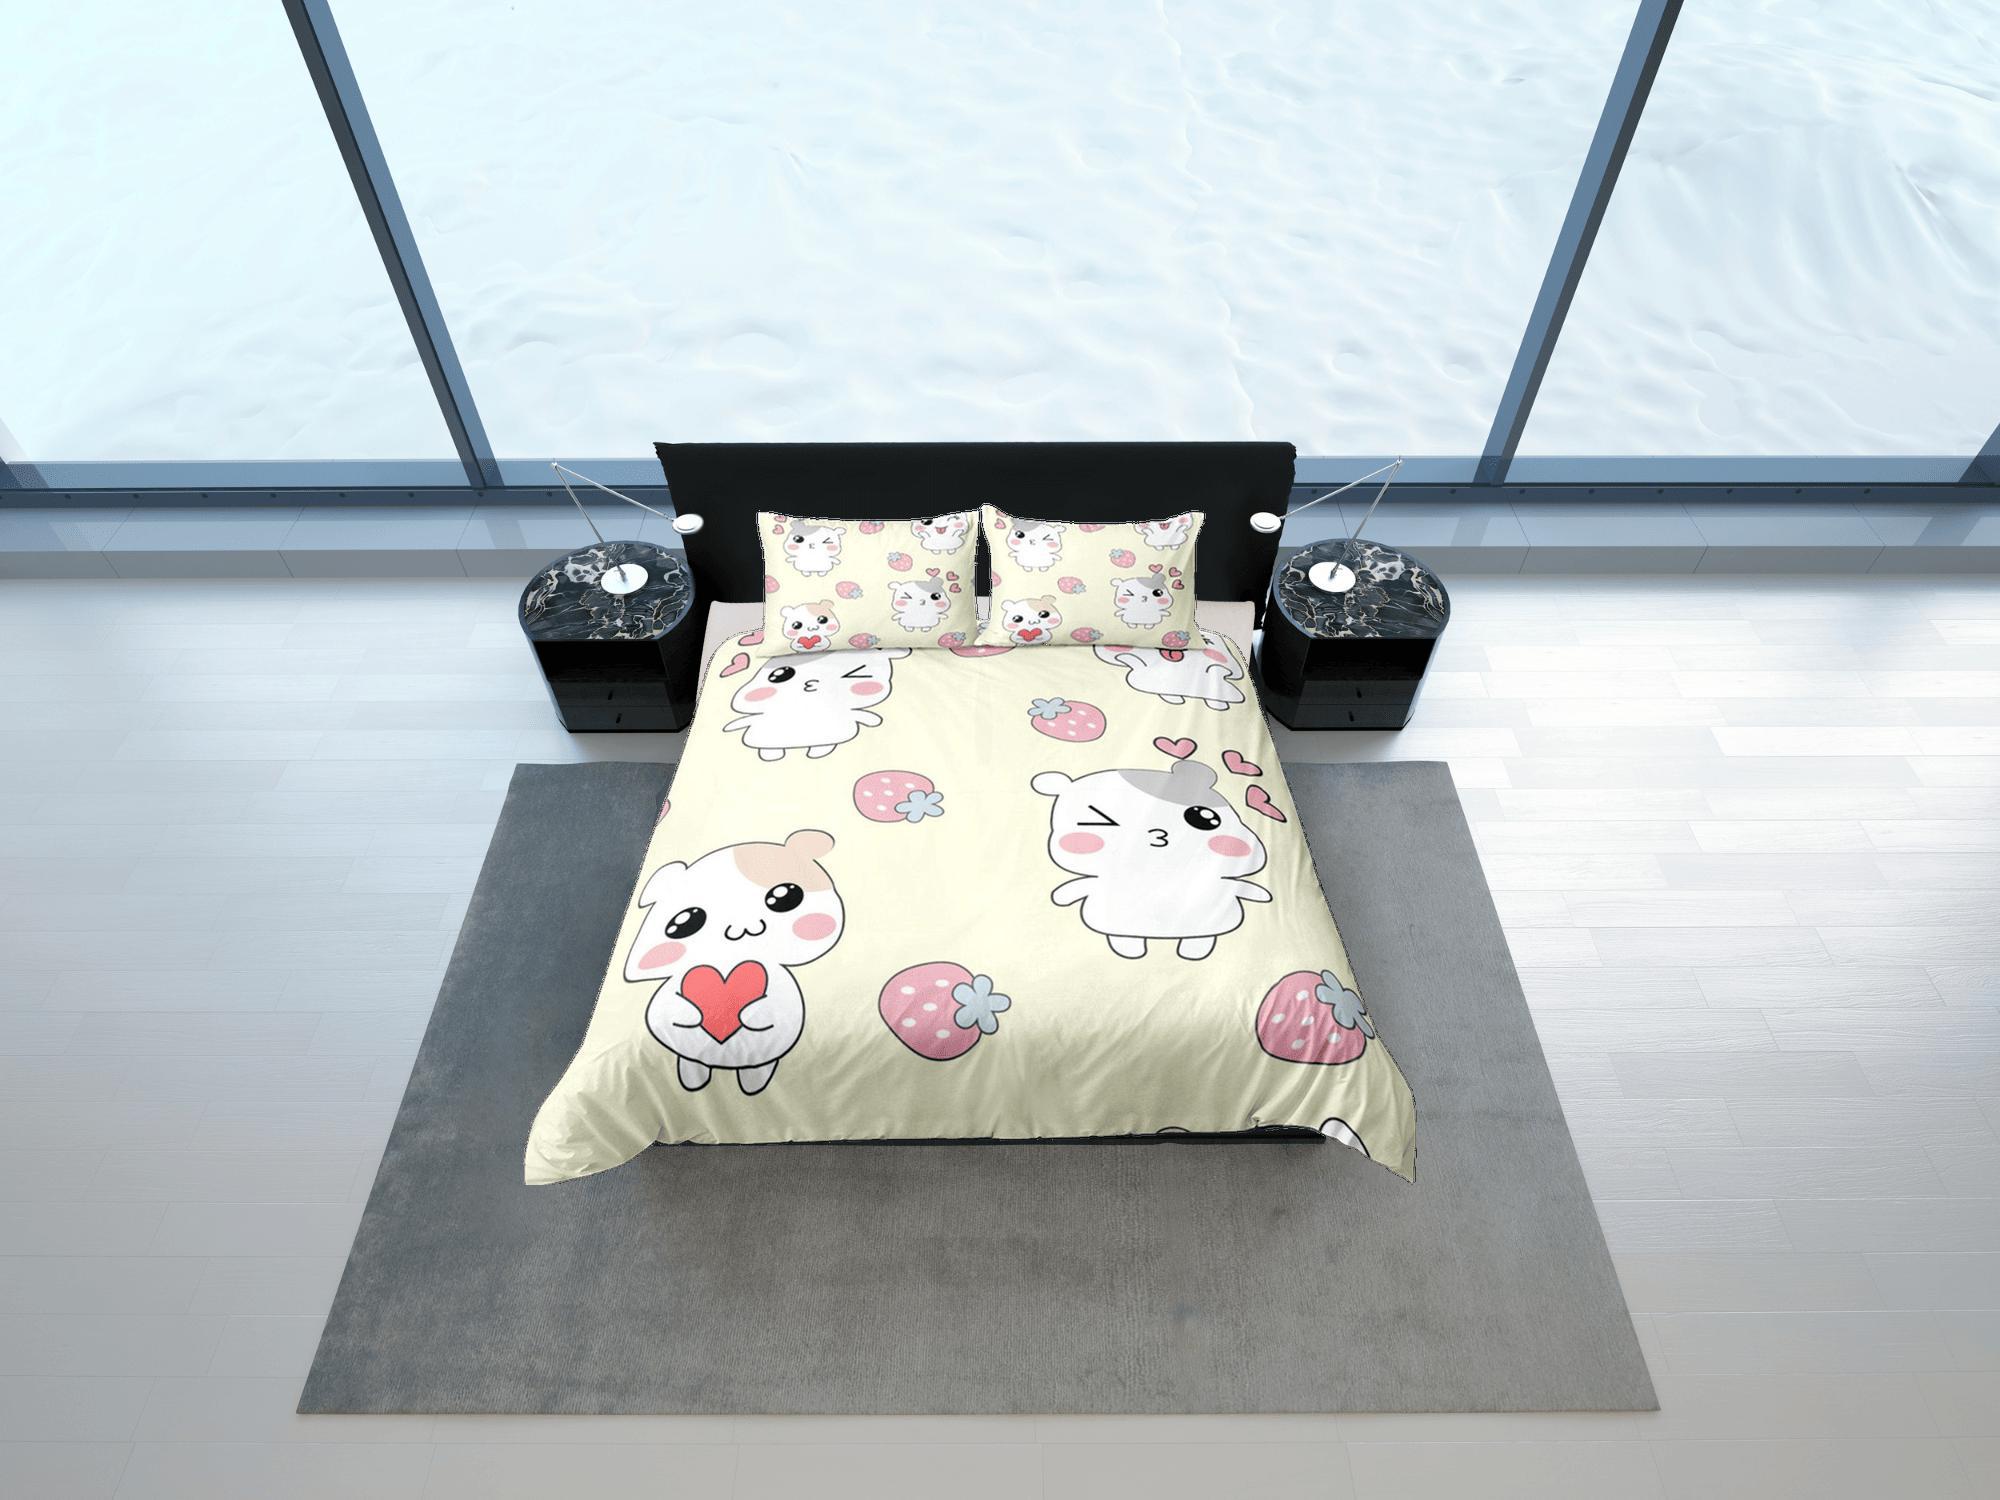 daintyduvet hamster anime duvet cover set cute bedspread kawaii dorm bedding single with pillowcase comforter cover twin 4 cc83a172 847b 437f 87d1 adcd932ddc04